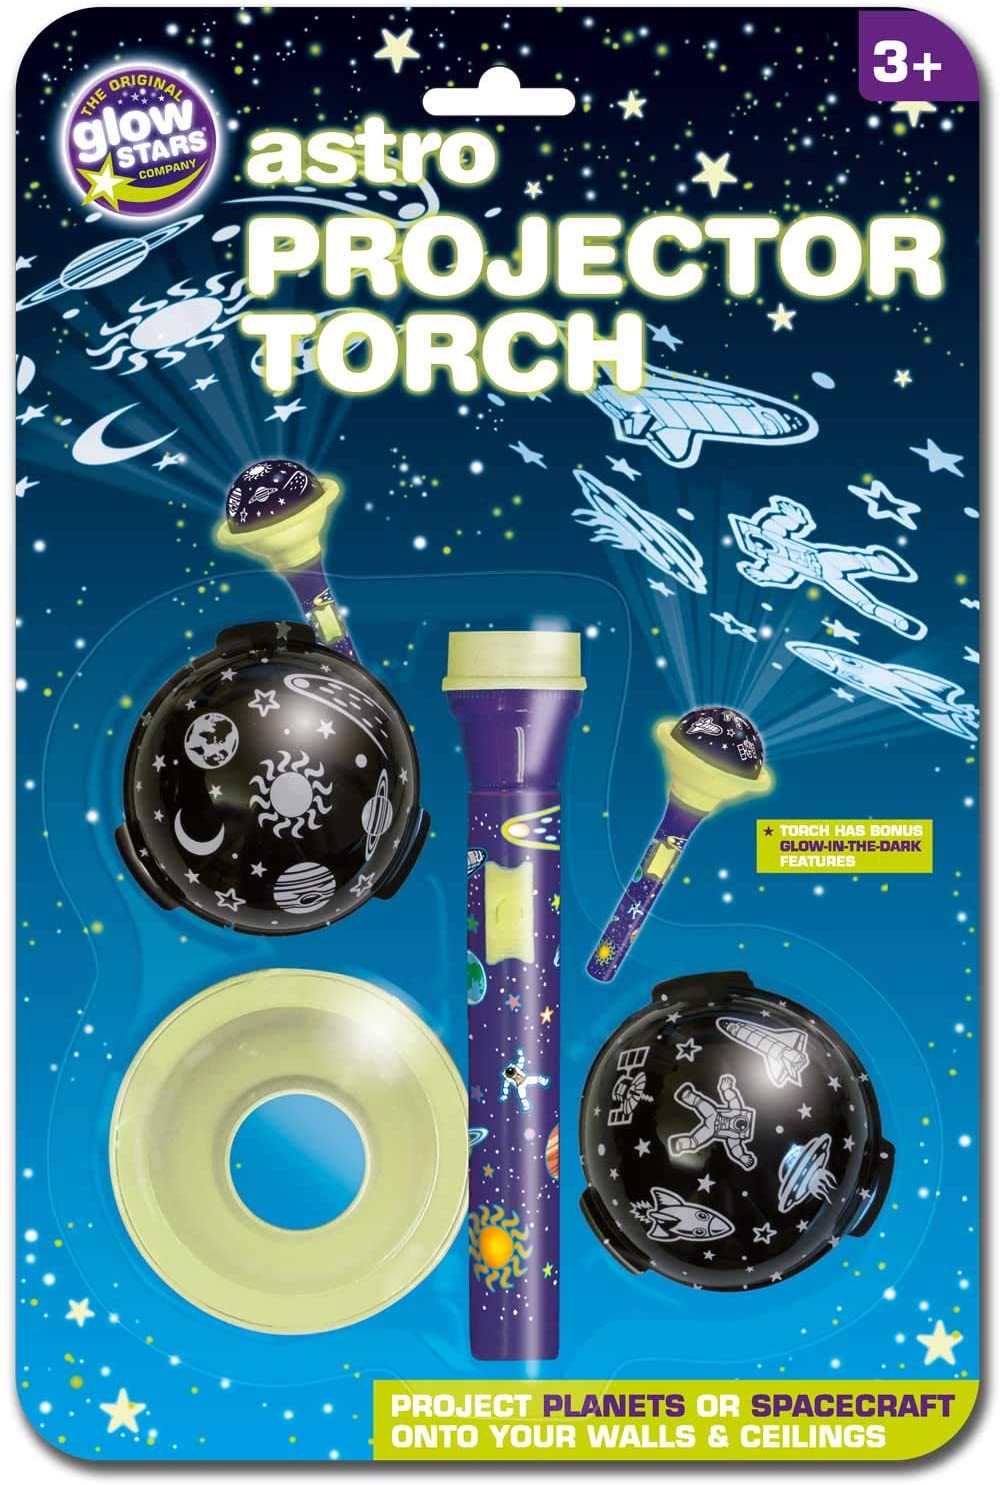 Brainstorm Astro: Projector Torch